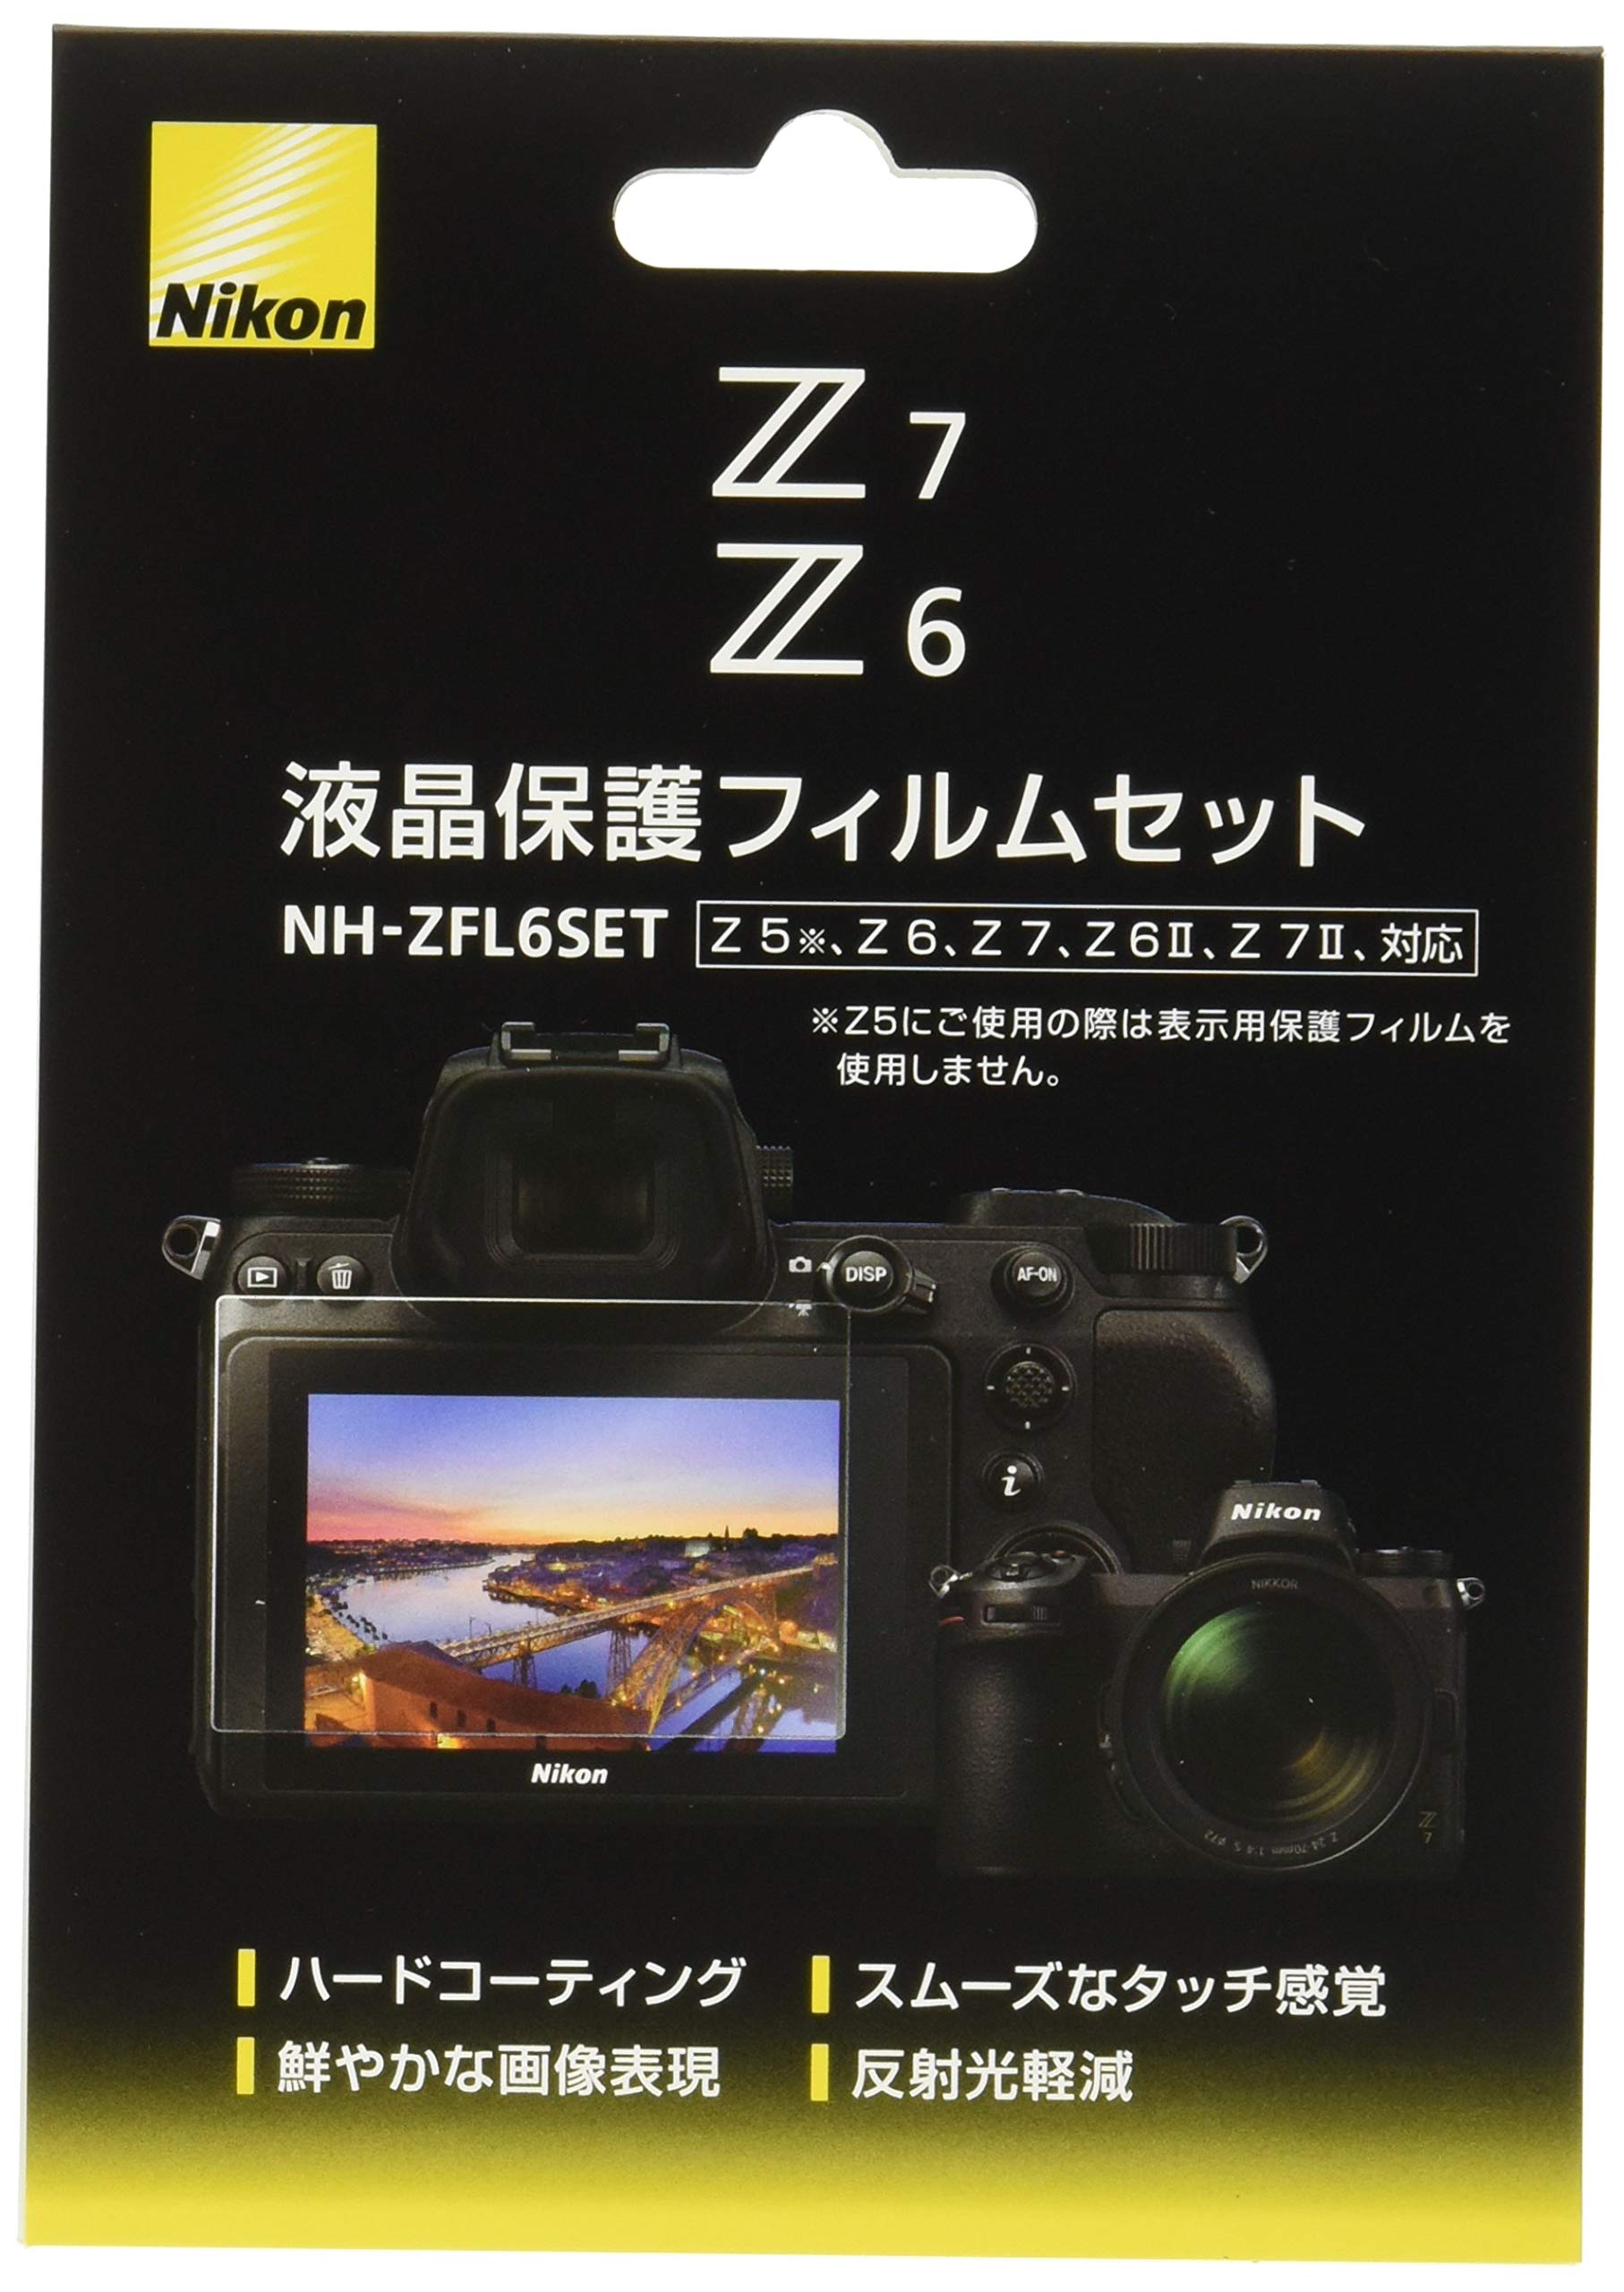 RANikon Z50 / Z5 / Z6 / /Z62 / Z7 / Z72 用液晶保護フィルムセット NH-ZFL6SET